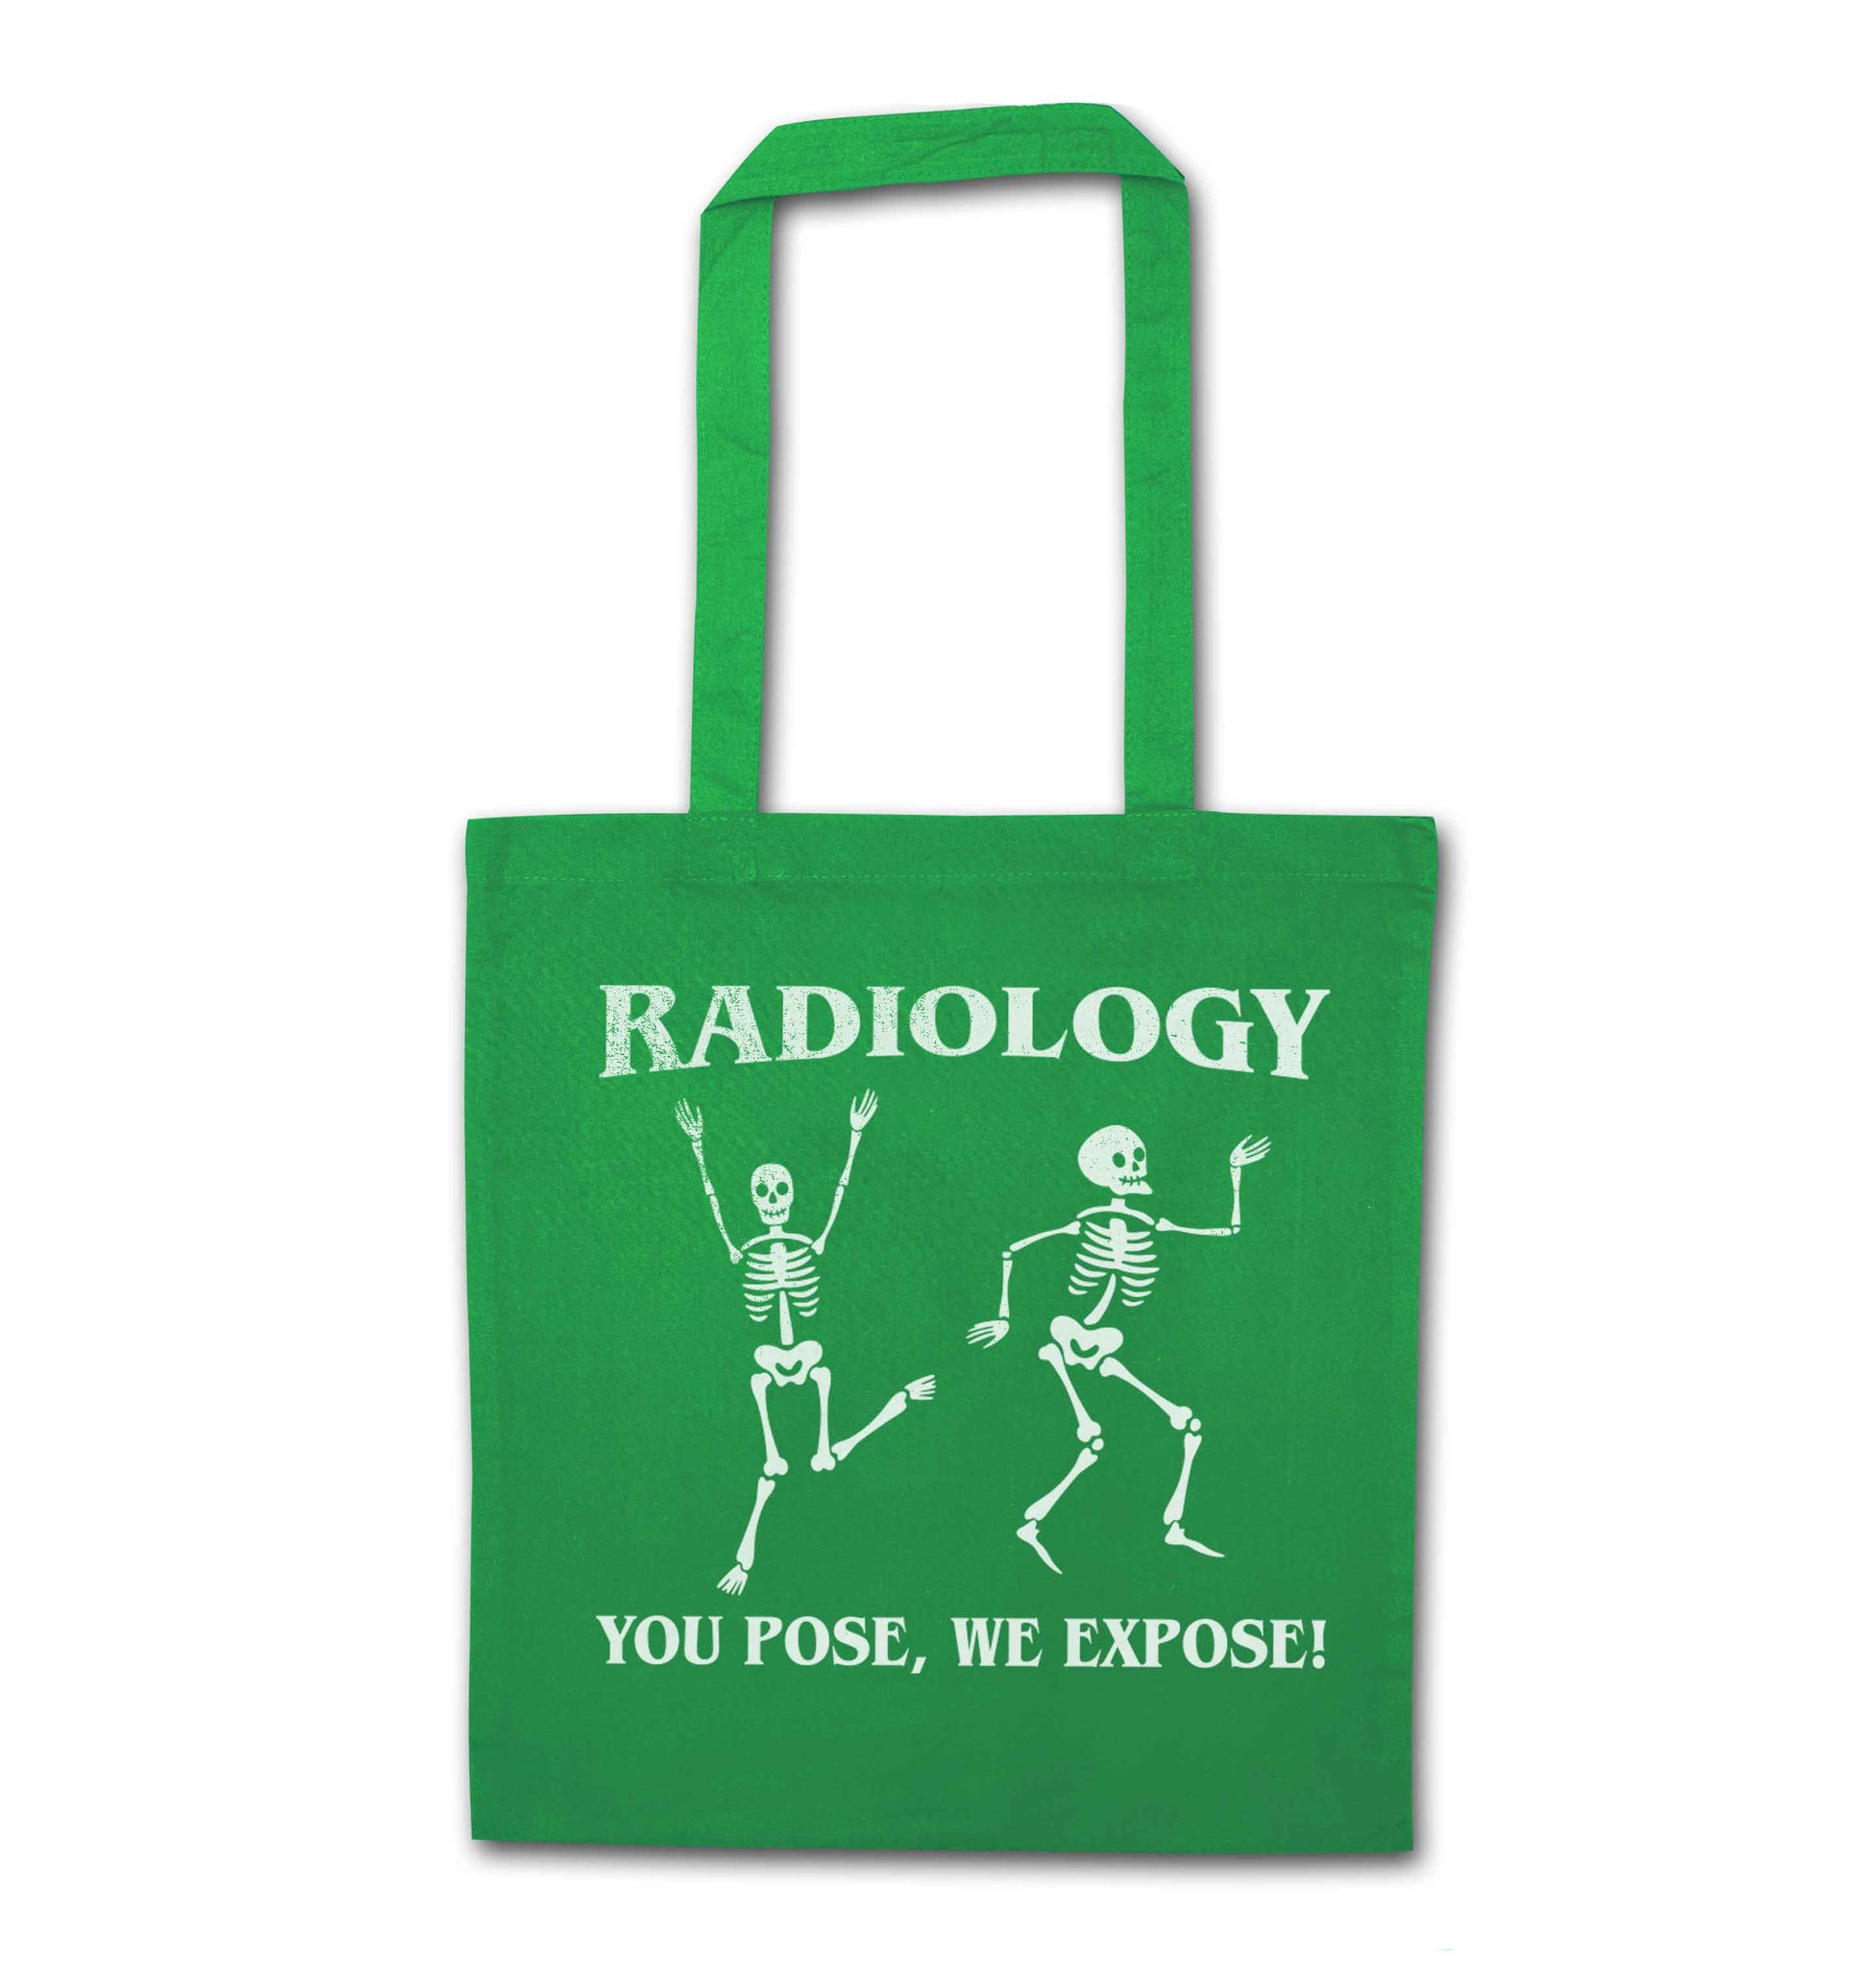 Radiology you pose we expose green tote bag